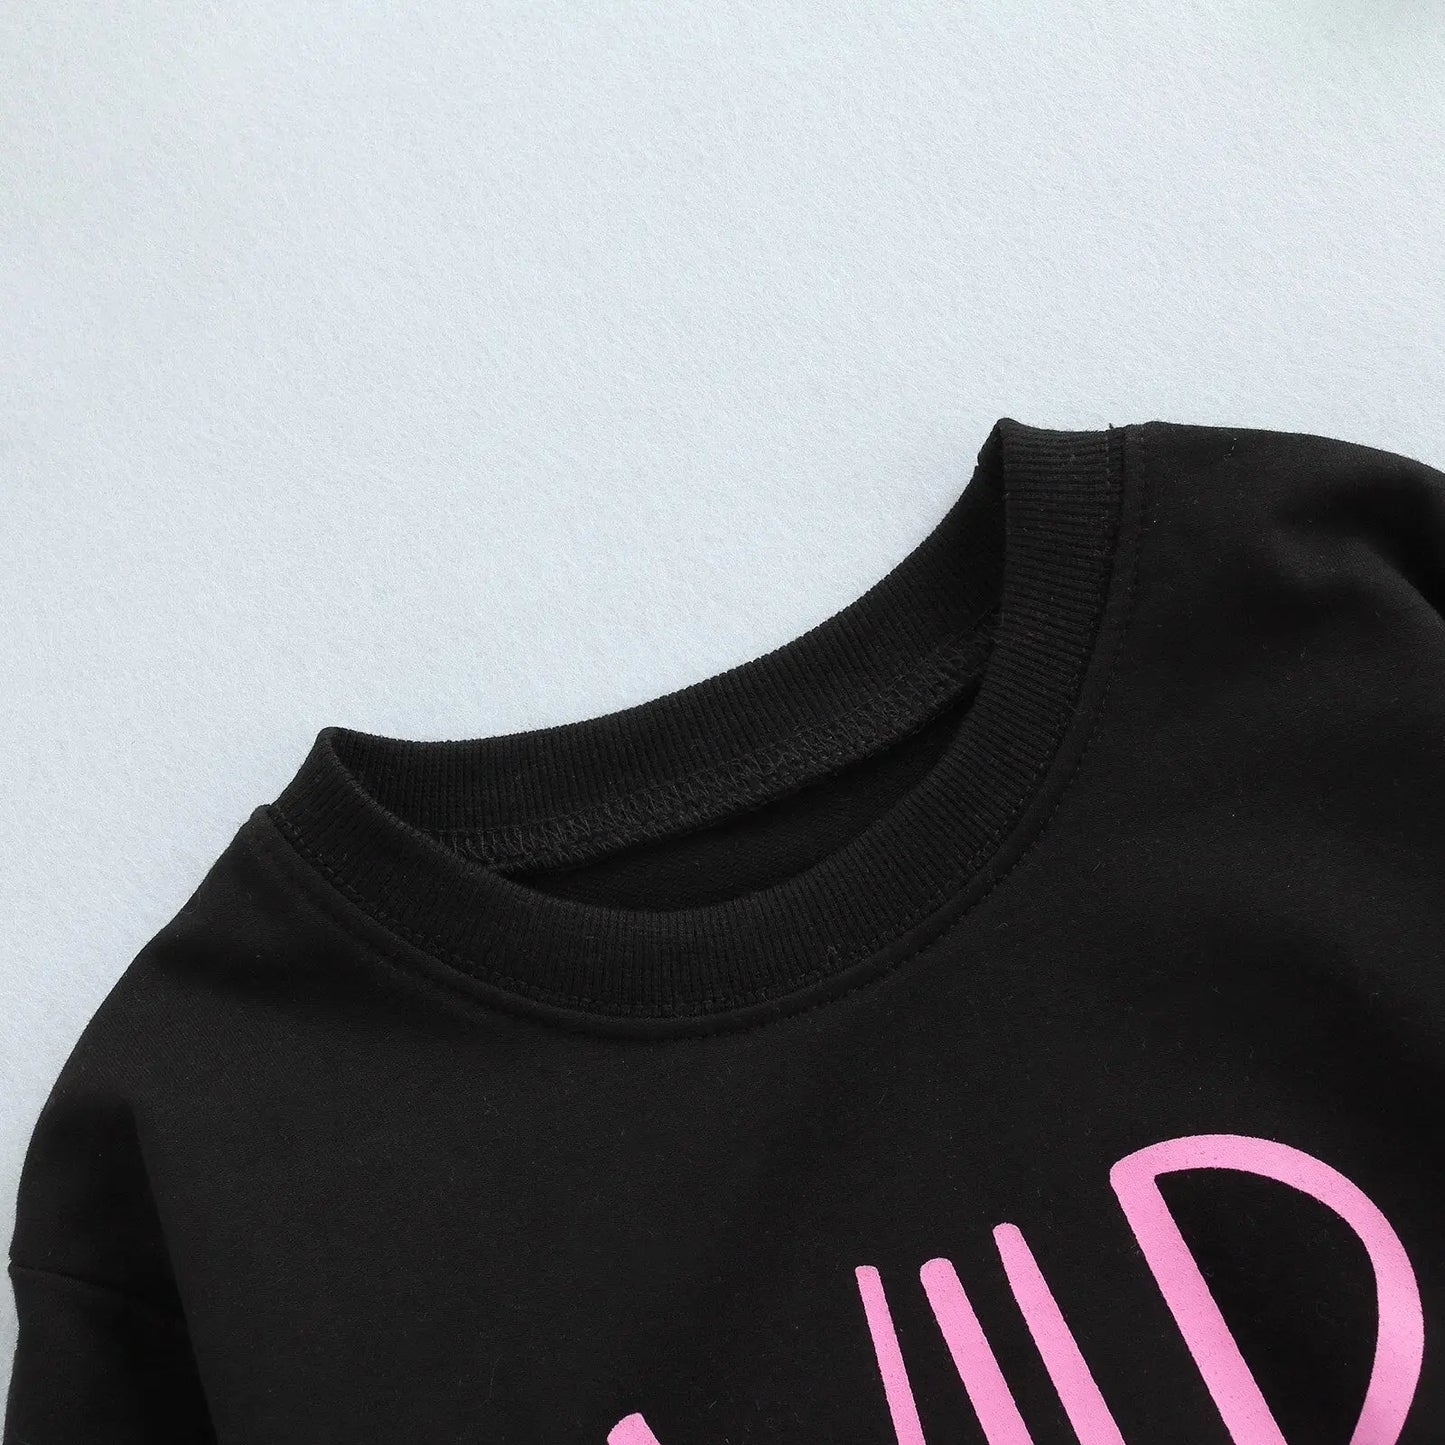 Baby Sweatshirt Tops with Letter Print - K3N VENTURES